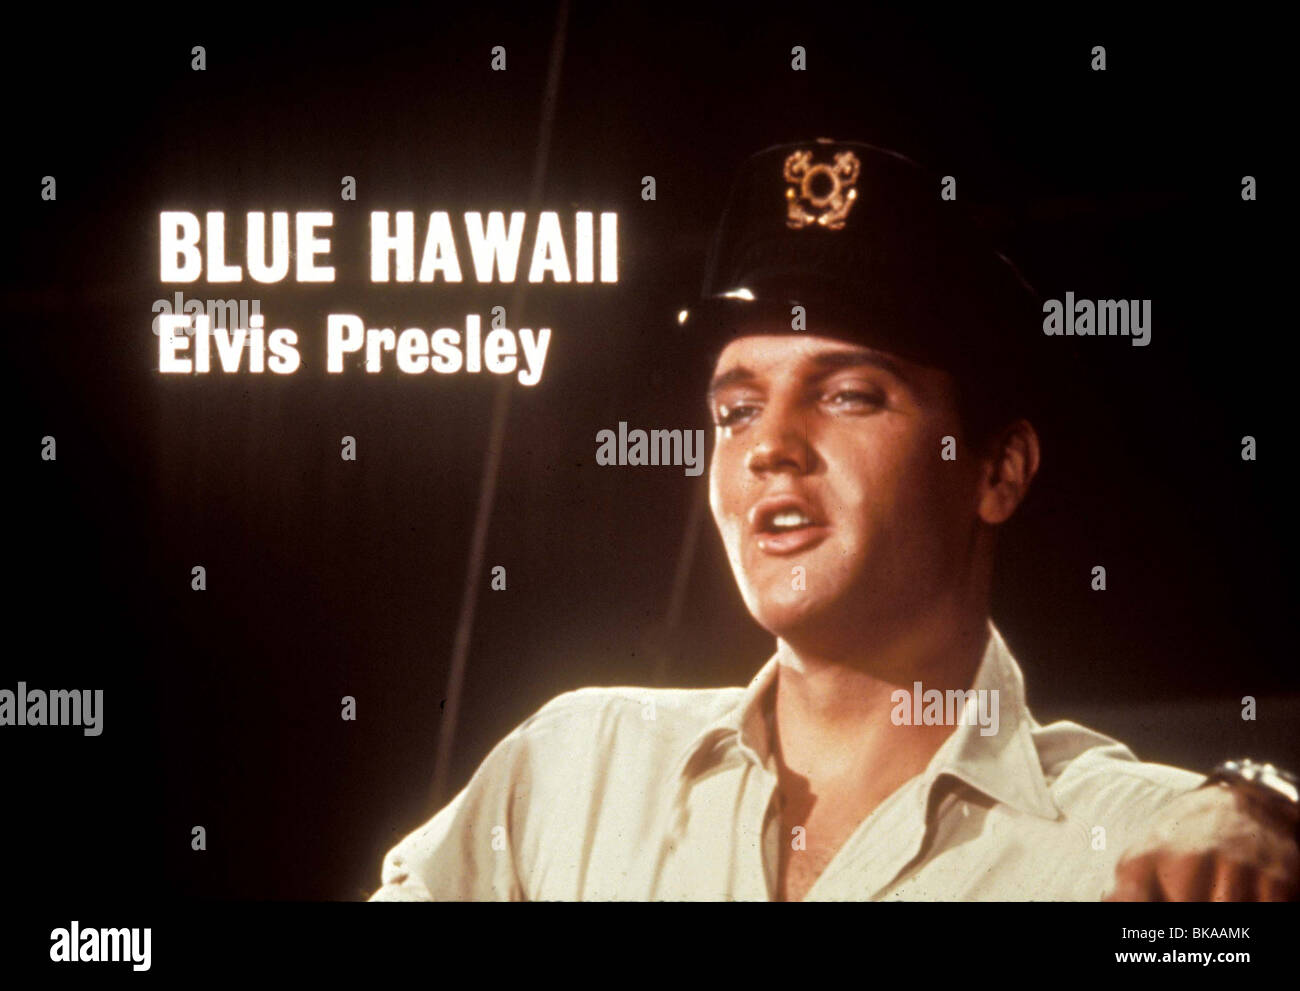 BLUE HAWAII ELVIS PRESLEY BWH 003 Stock Photo